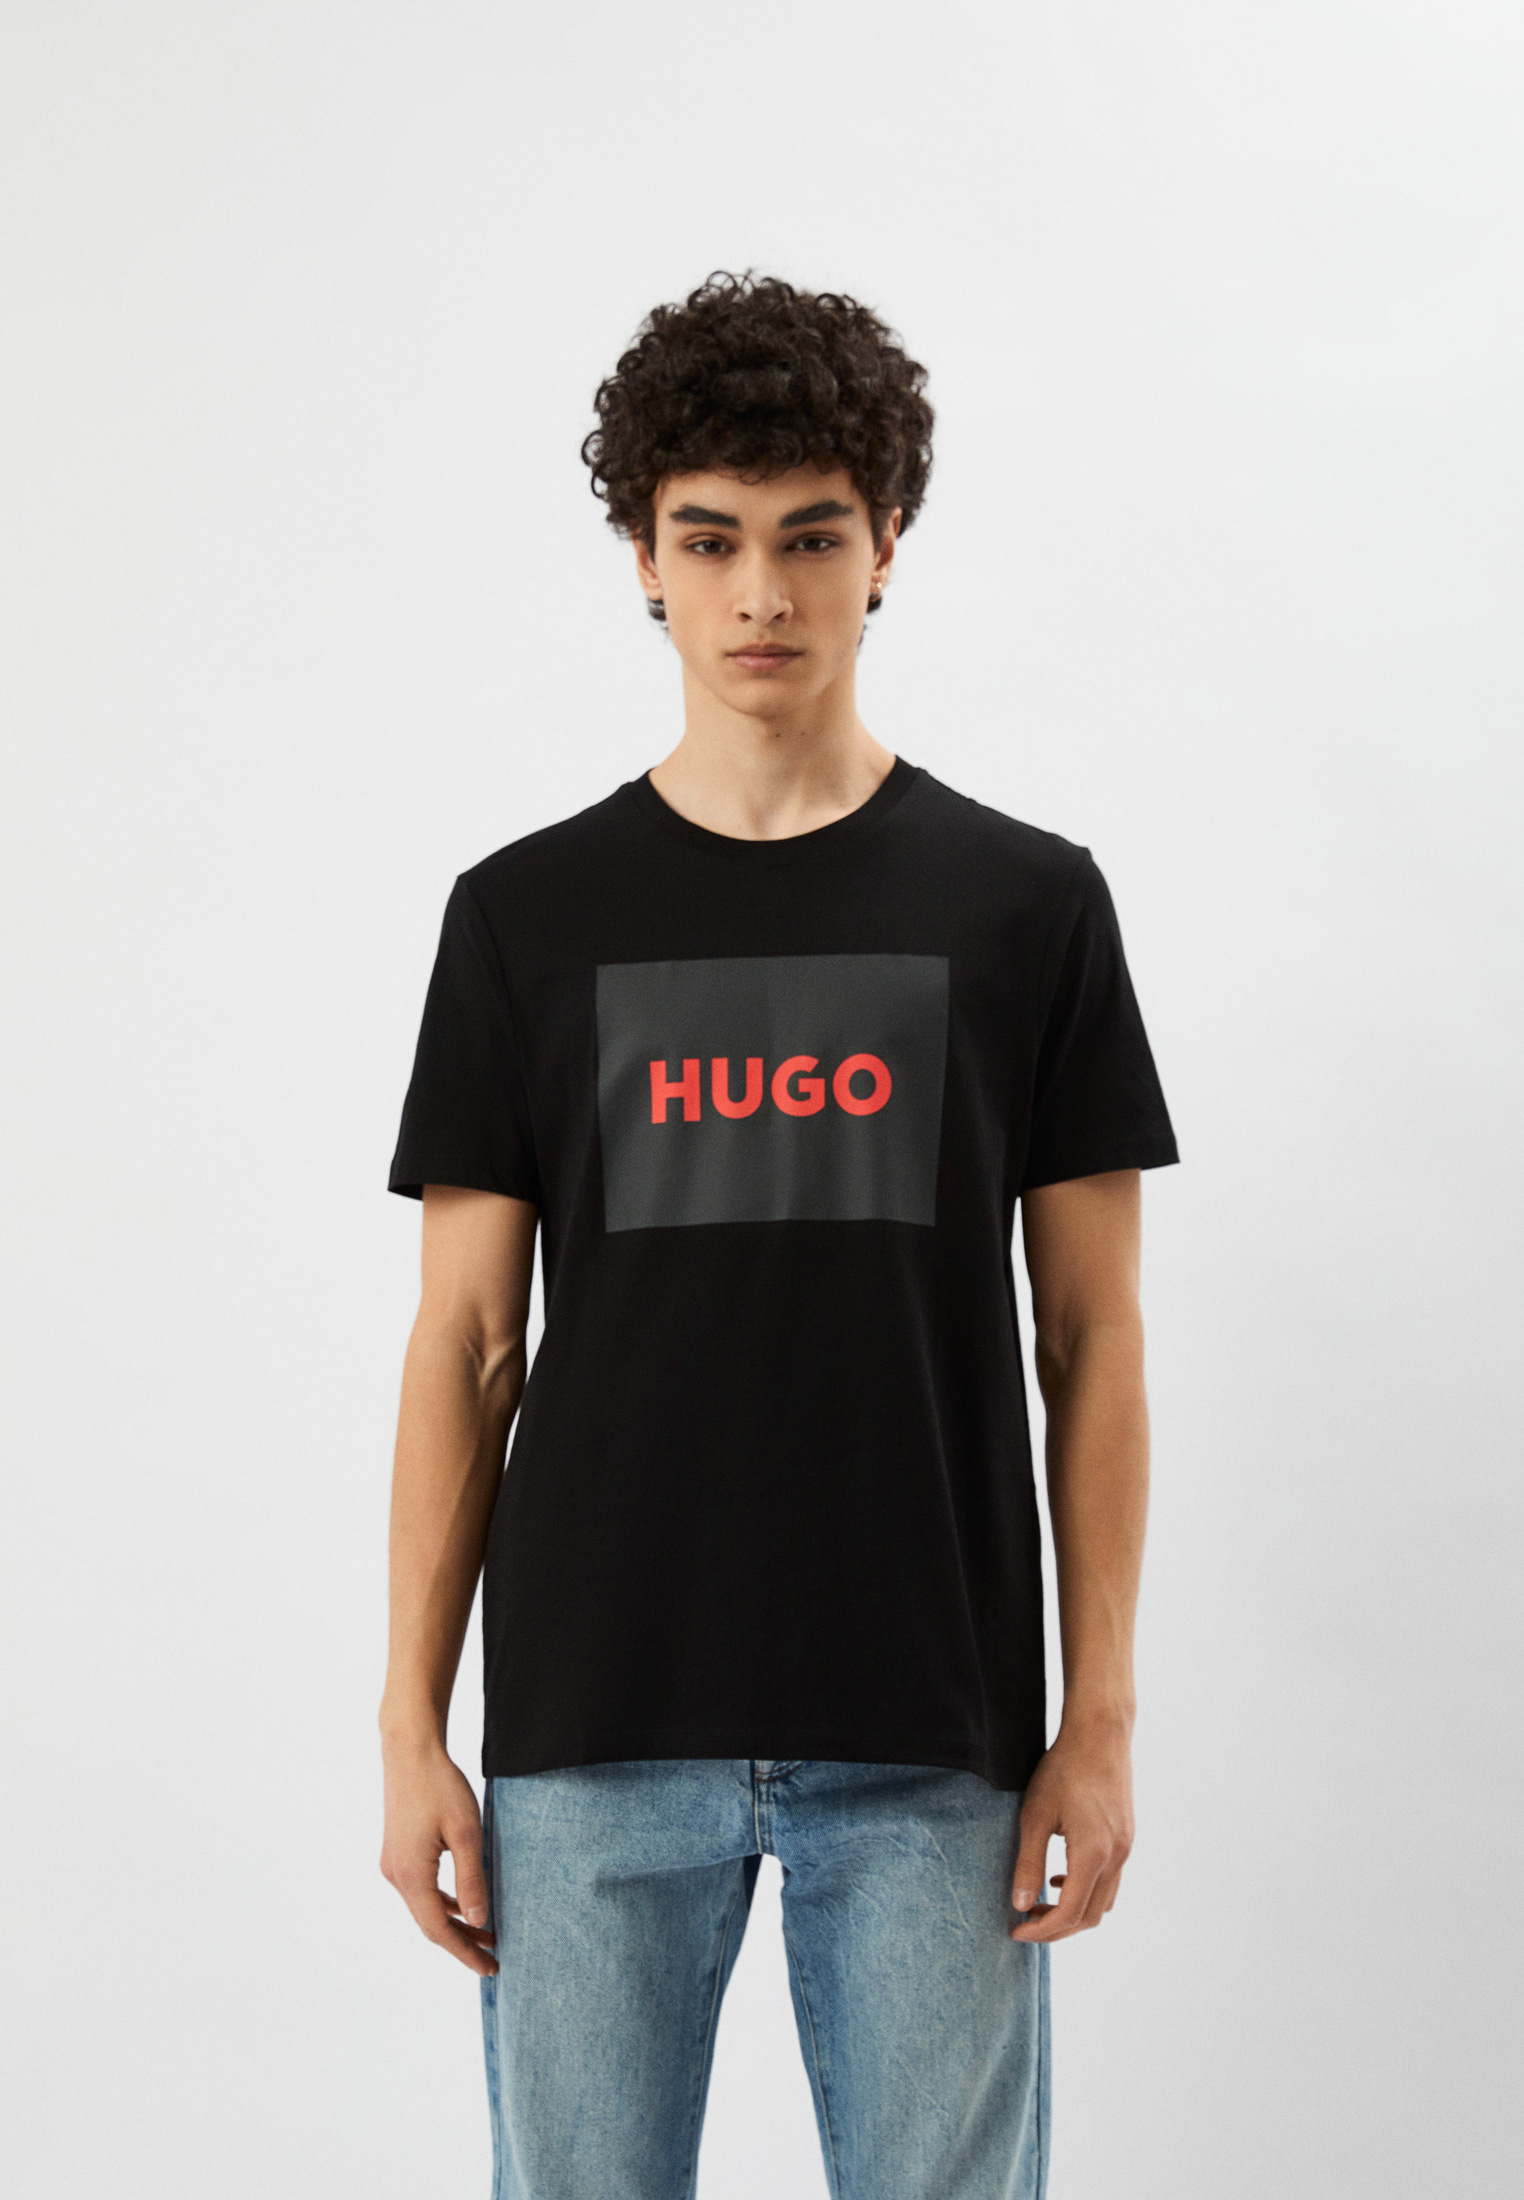 Hugo black. Hugo футболка мужская. Футболка Hugo черная. Футболка Hugo черная с красной вышивкой. Hugo футболка с тигром.